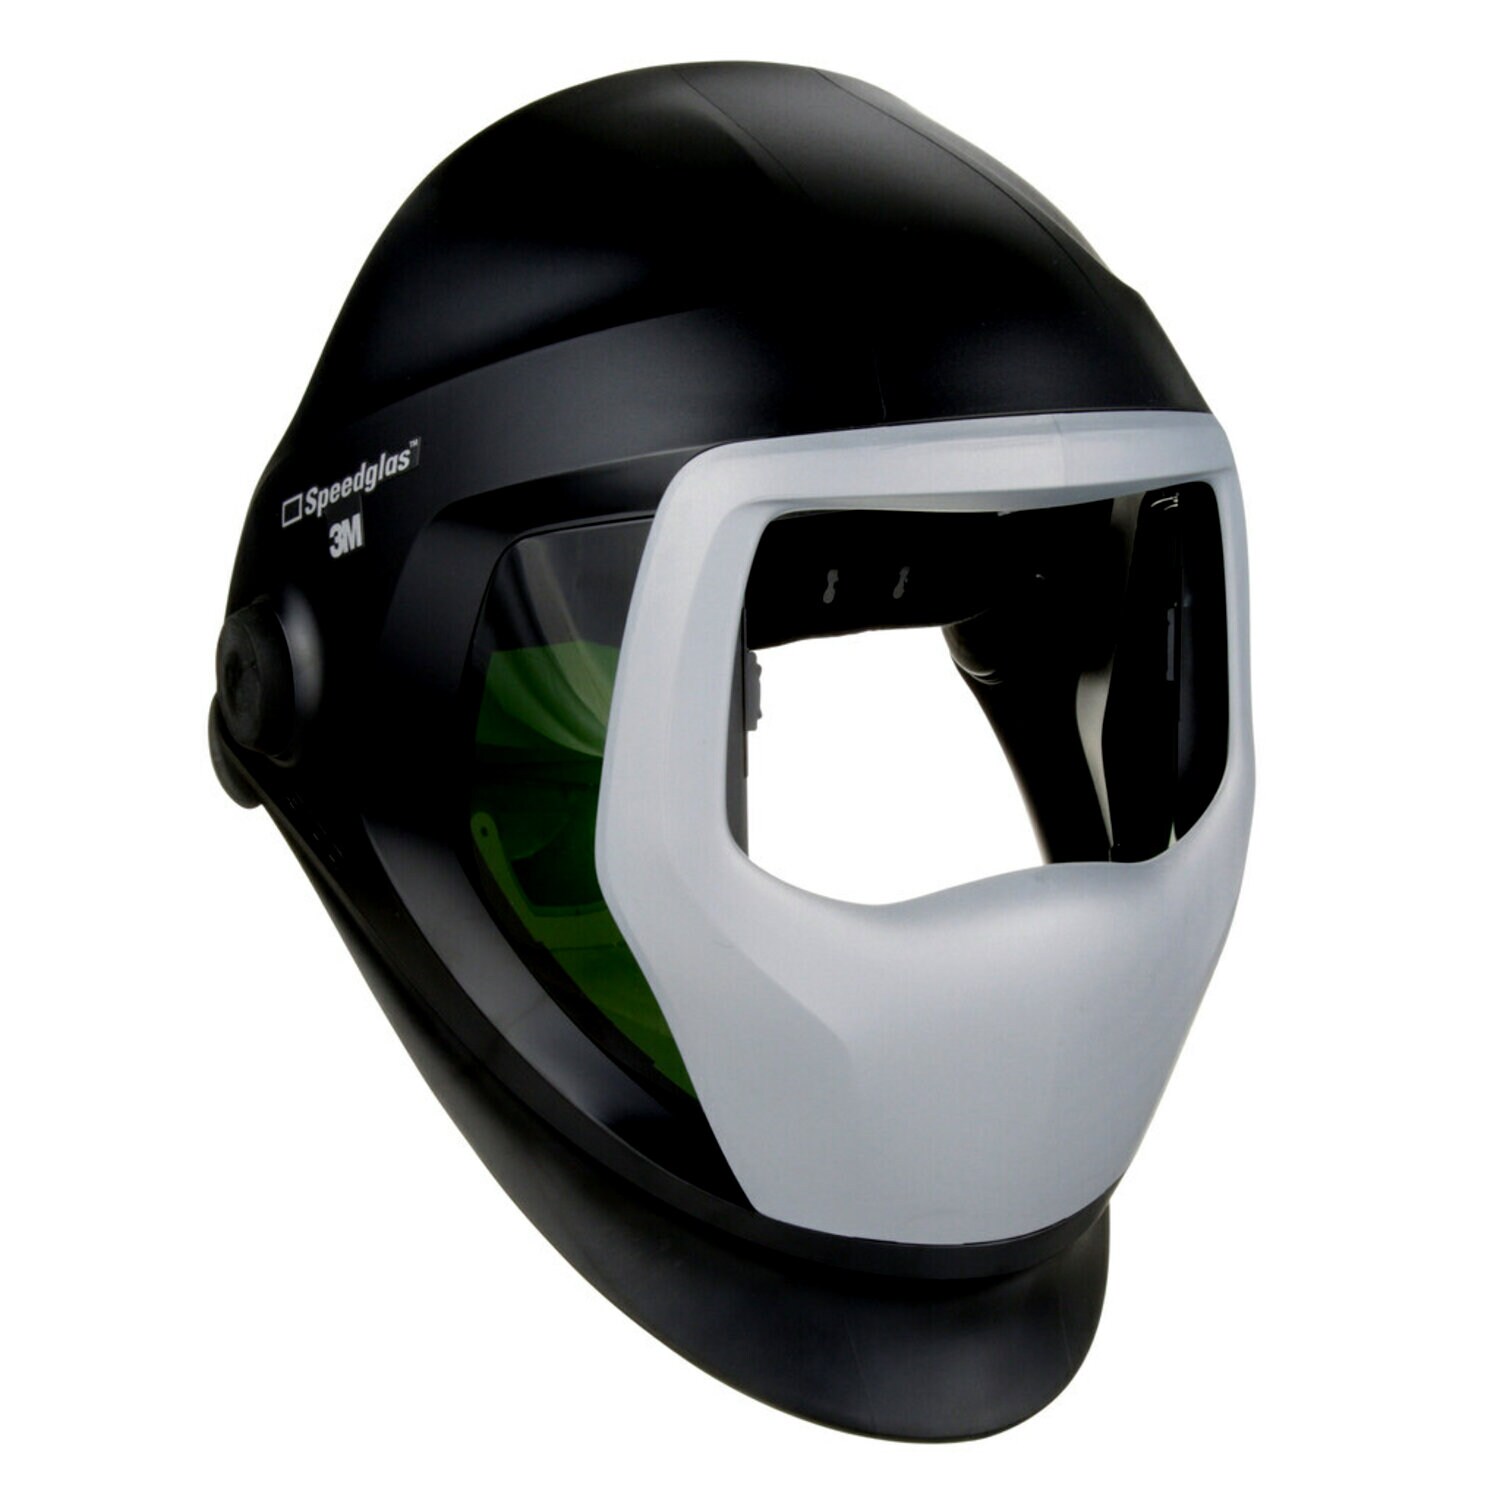 7000127133 - 3M Speedglas 9100 Welding Helmet 06-0300-51SW, with SideWindows,
Headband and Silver Front Panel, 1 EA/Case